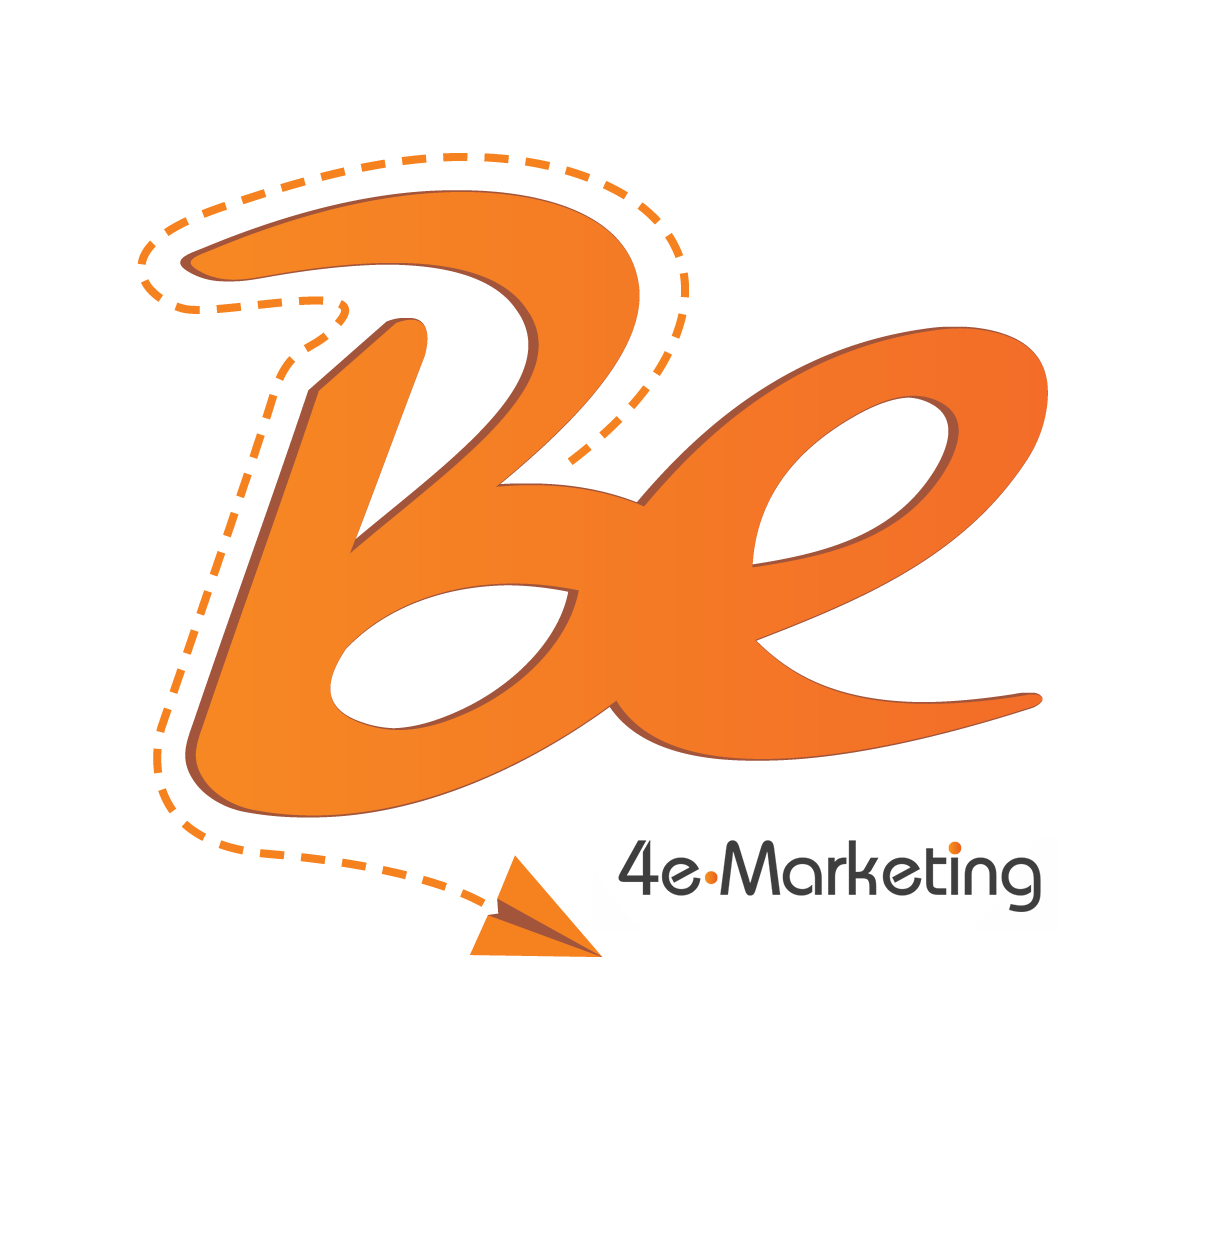 Be Digital Marketing Agency